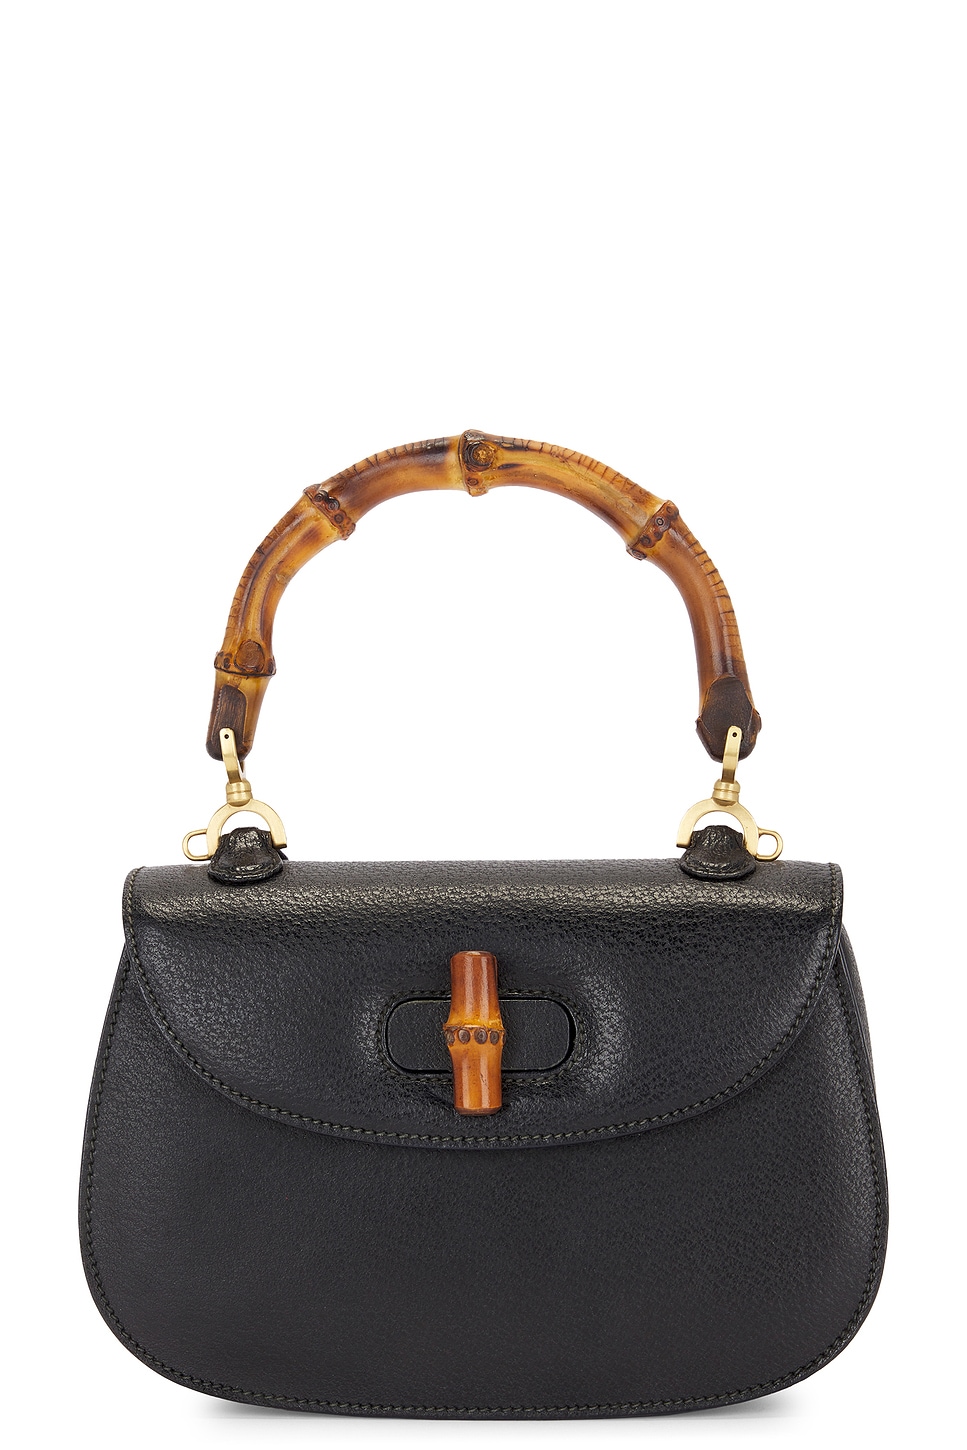 Gucci Bamboo Handbag In Black